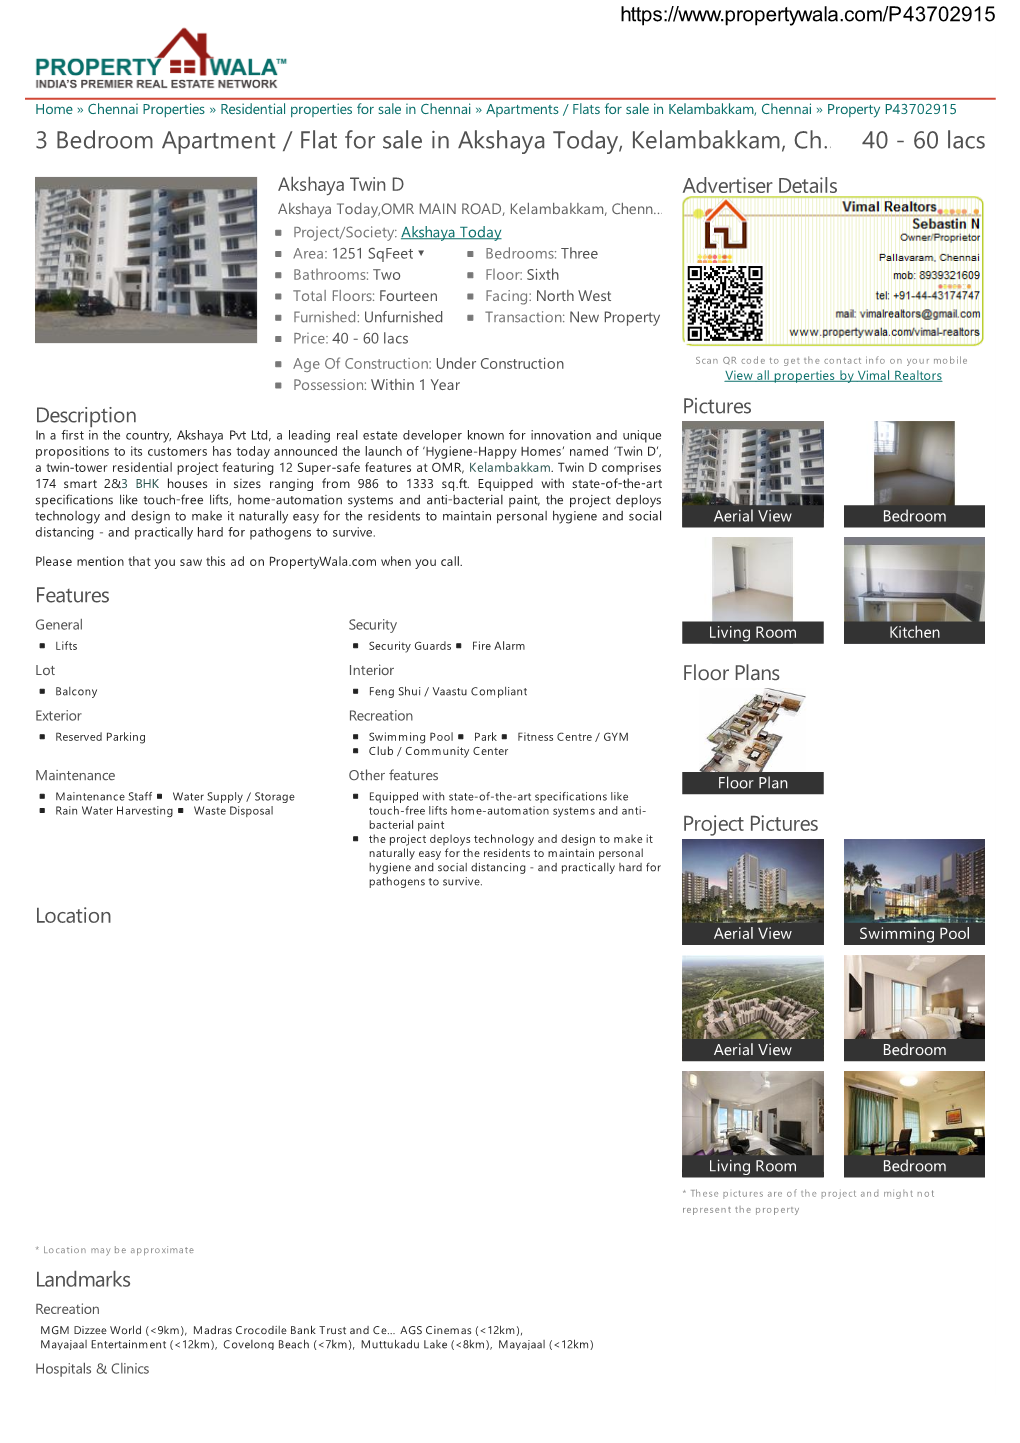 3 Bedroom Apartment / Flat for Sale in Akshaya Today, Kelambakkam